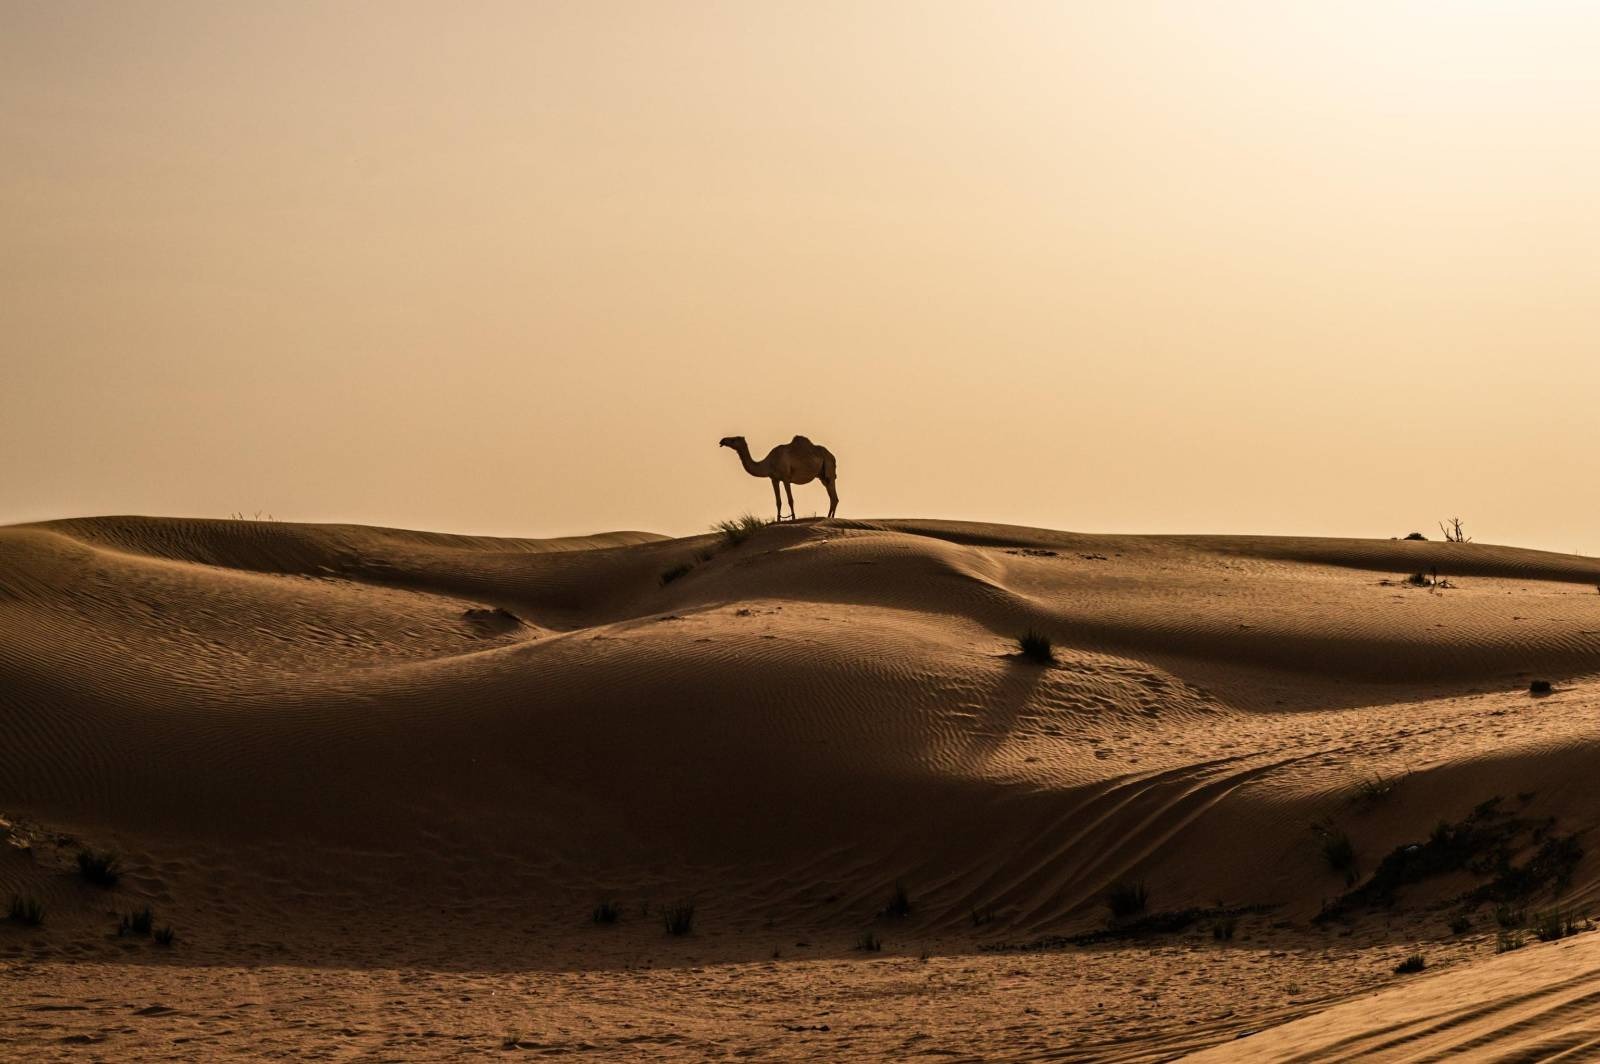 A camel in the Dubai desert in the evening